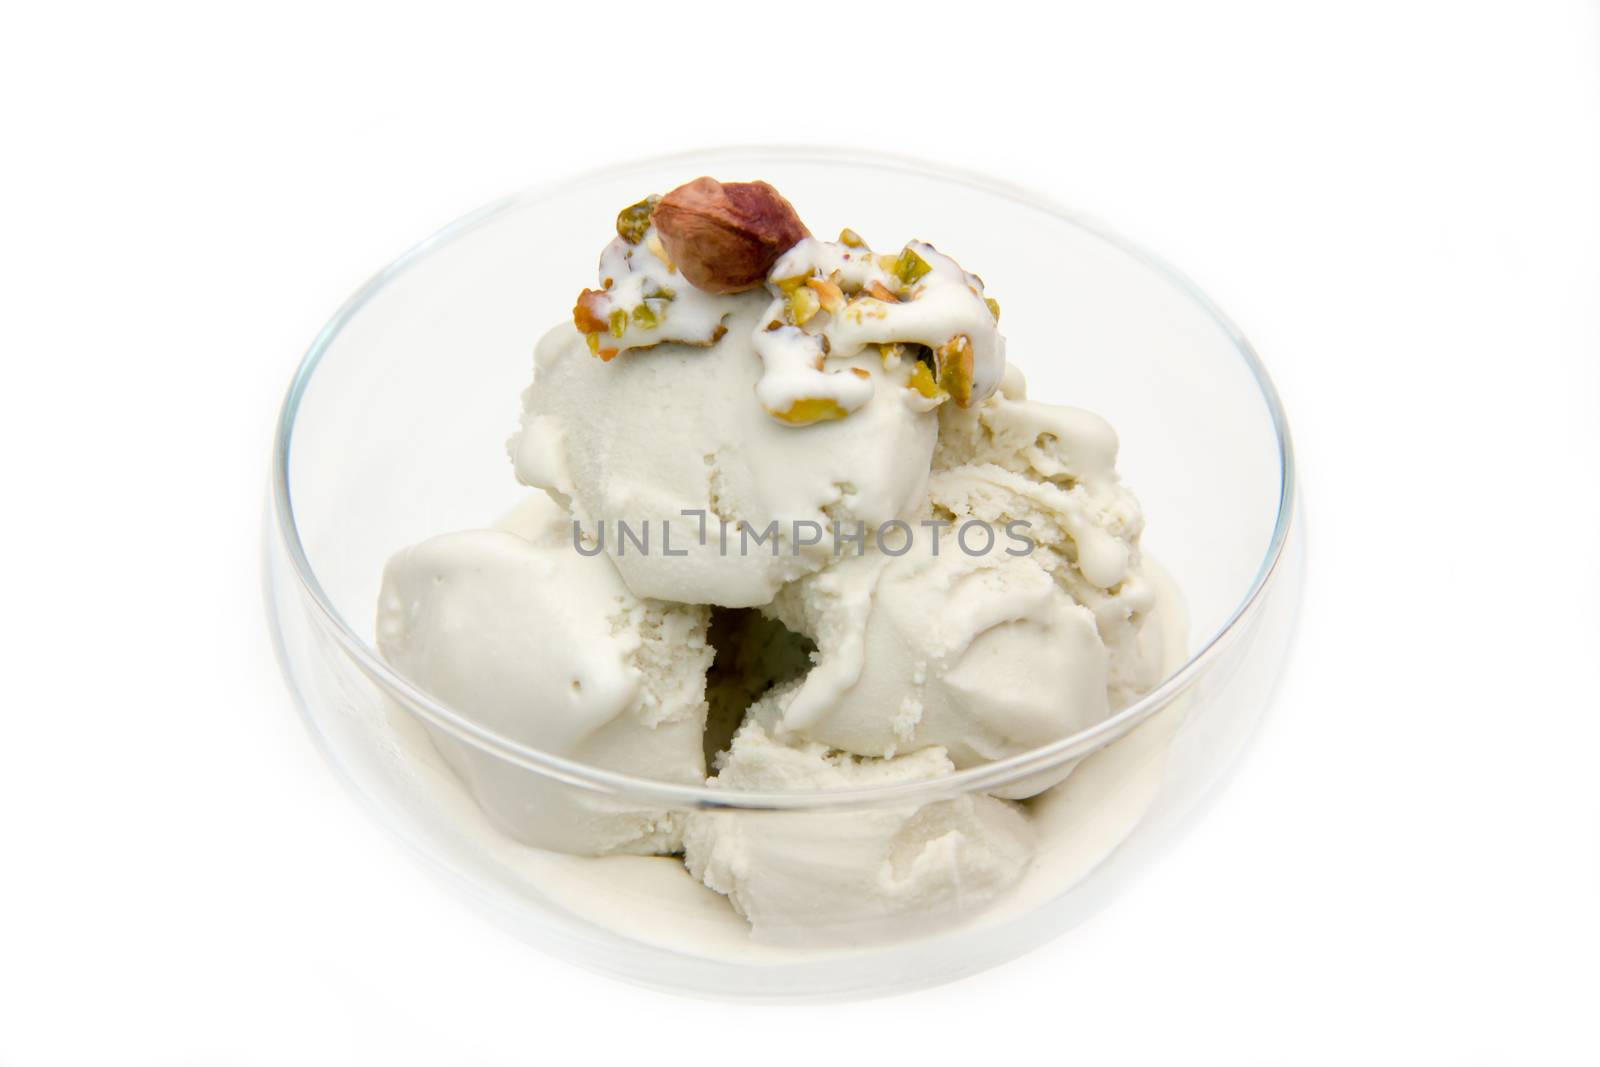 Pistachio ice cream by spafra